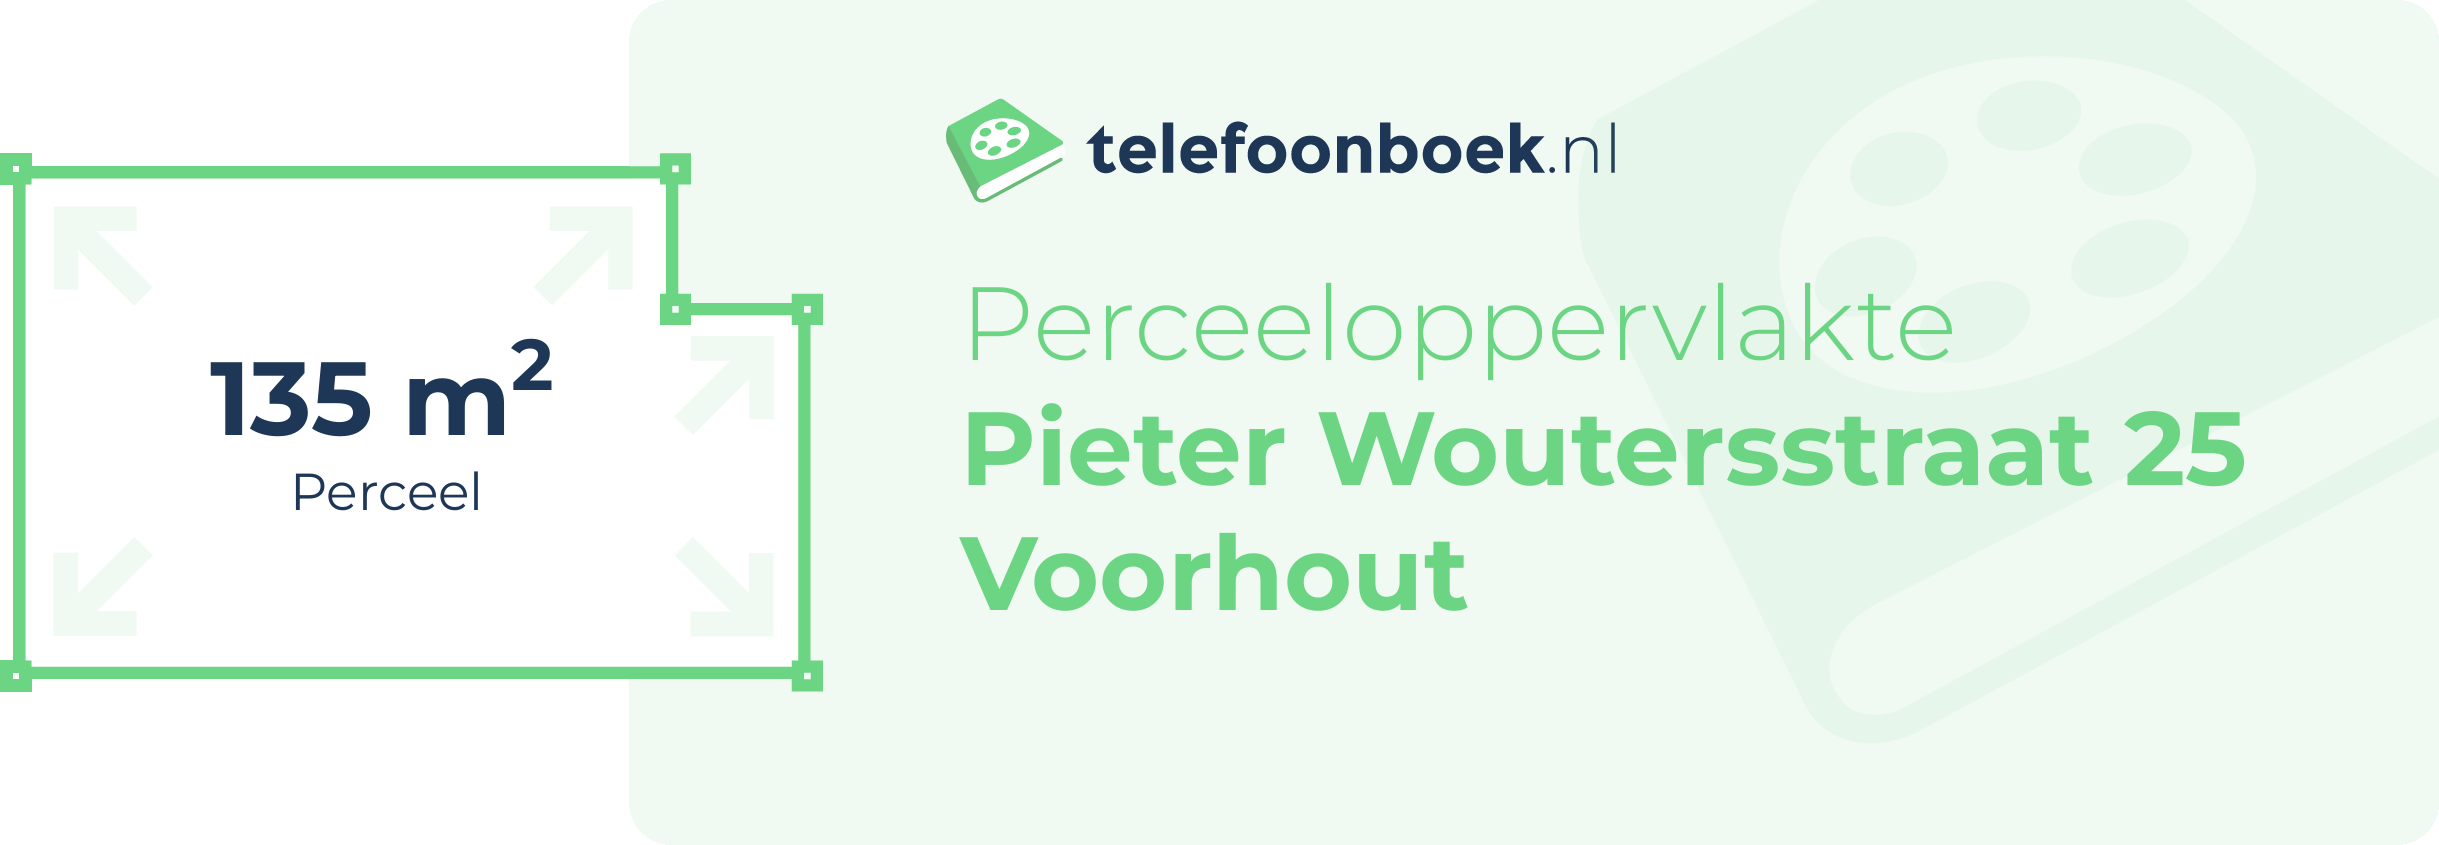 Perceeloppervlakte Pieter Woutersstraat 25 Voorhout